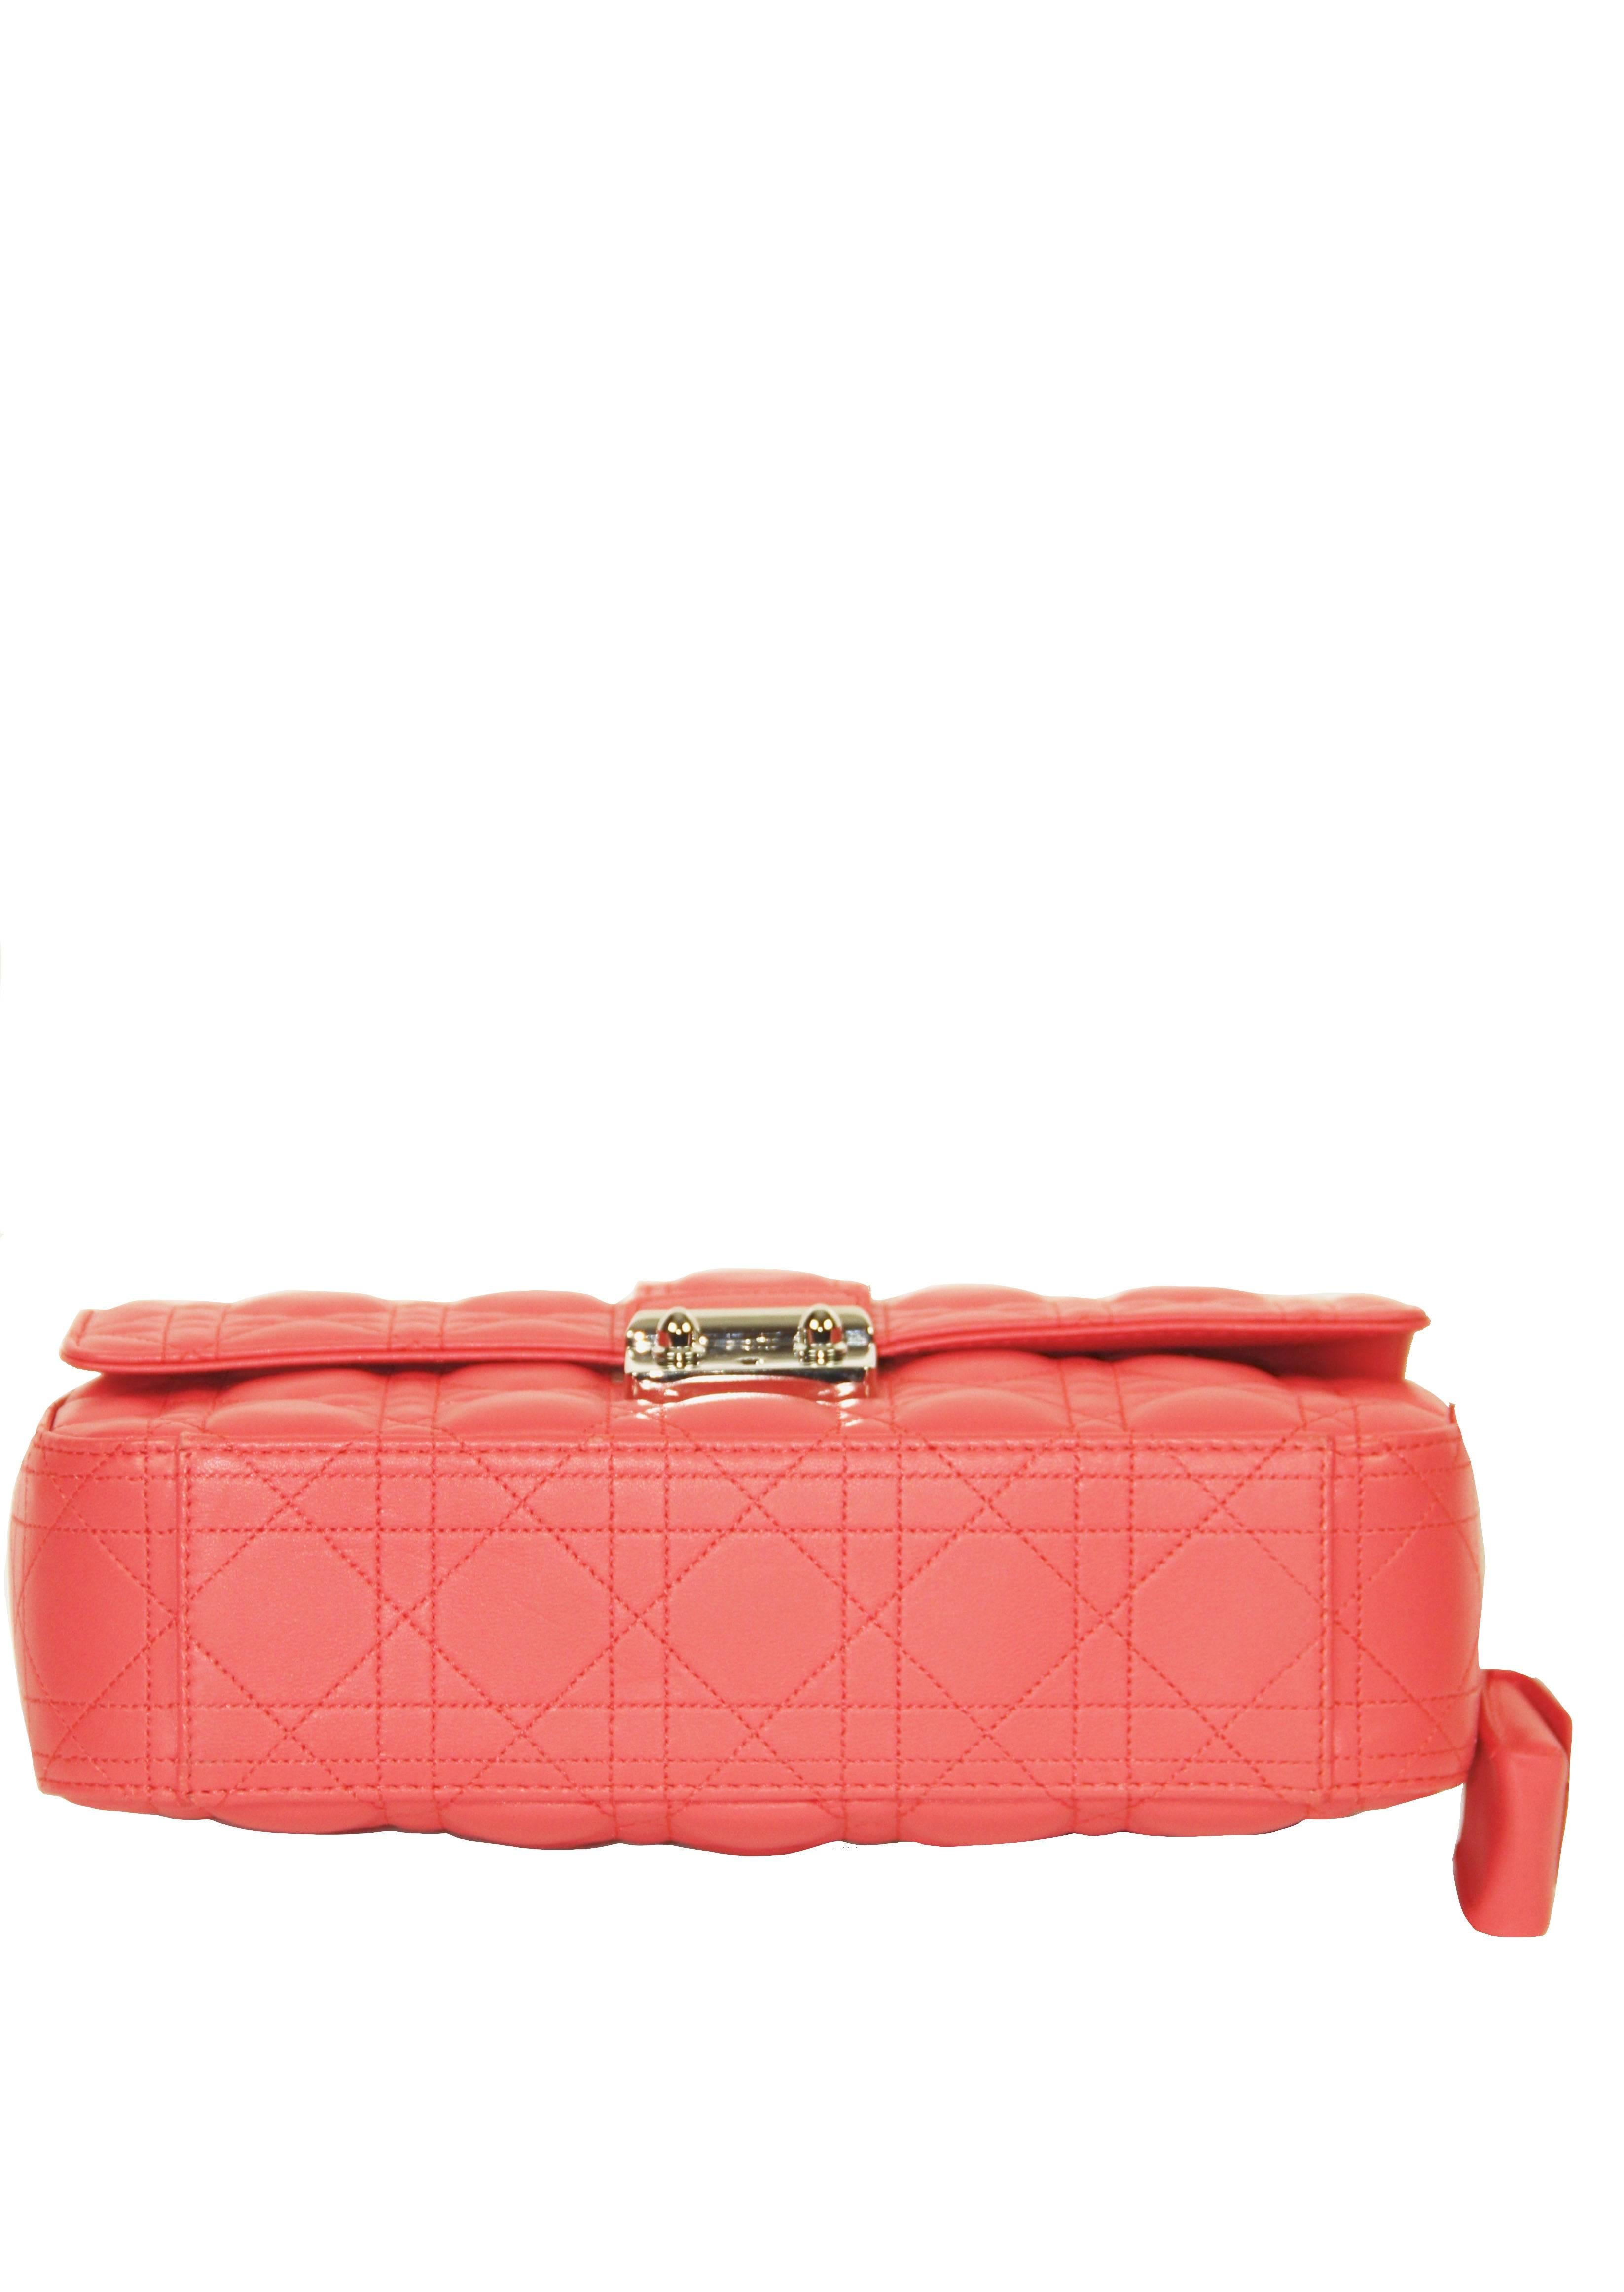 CHRISTIAN DIOR Miss Dior Pink Quilted Leather Shoulder Bag 2